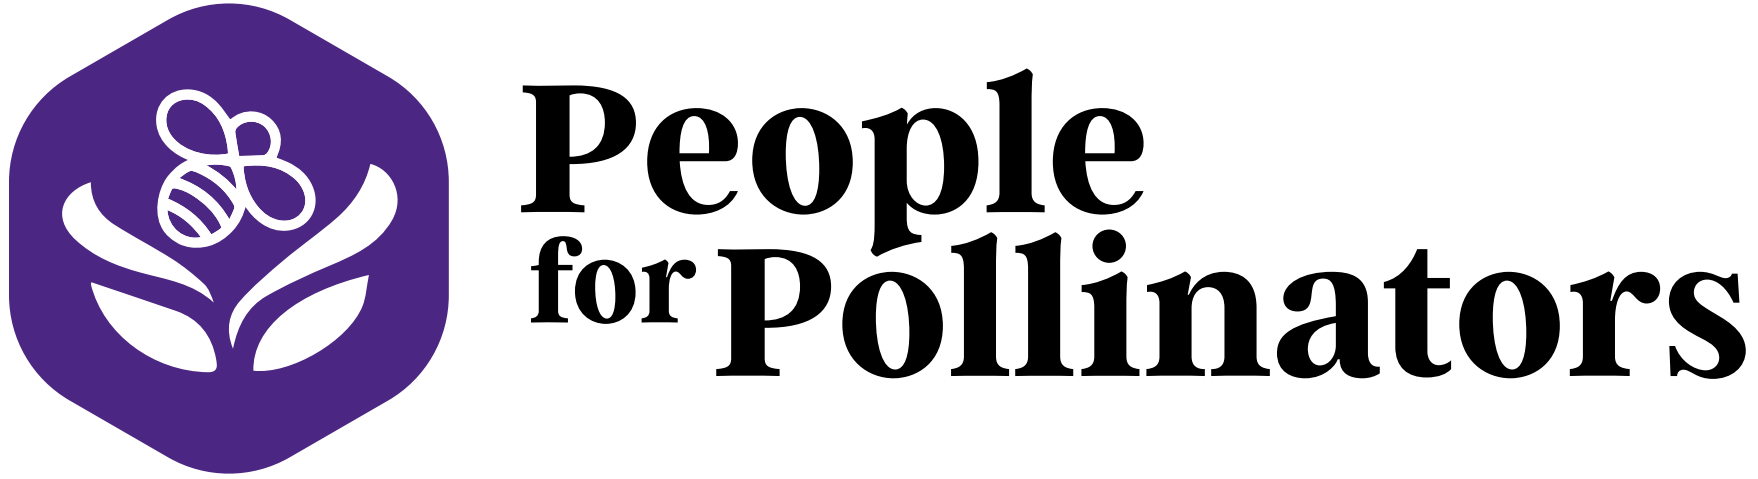 People for Pollinators logo